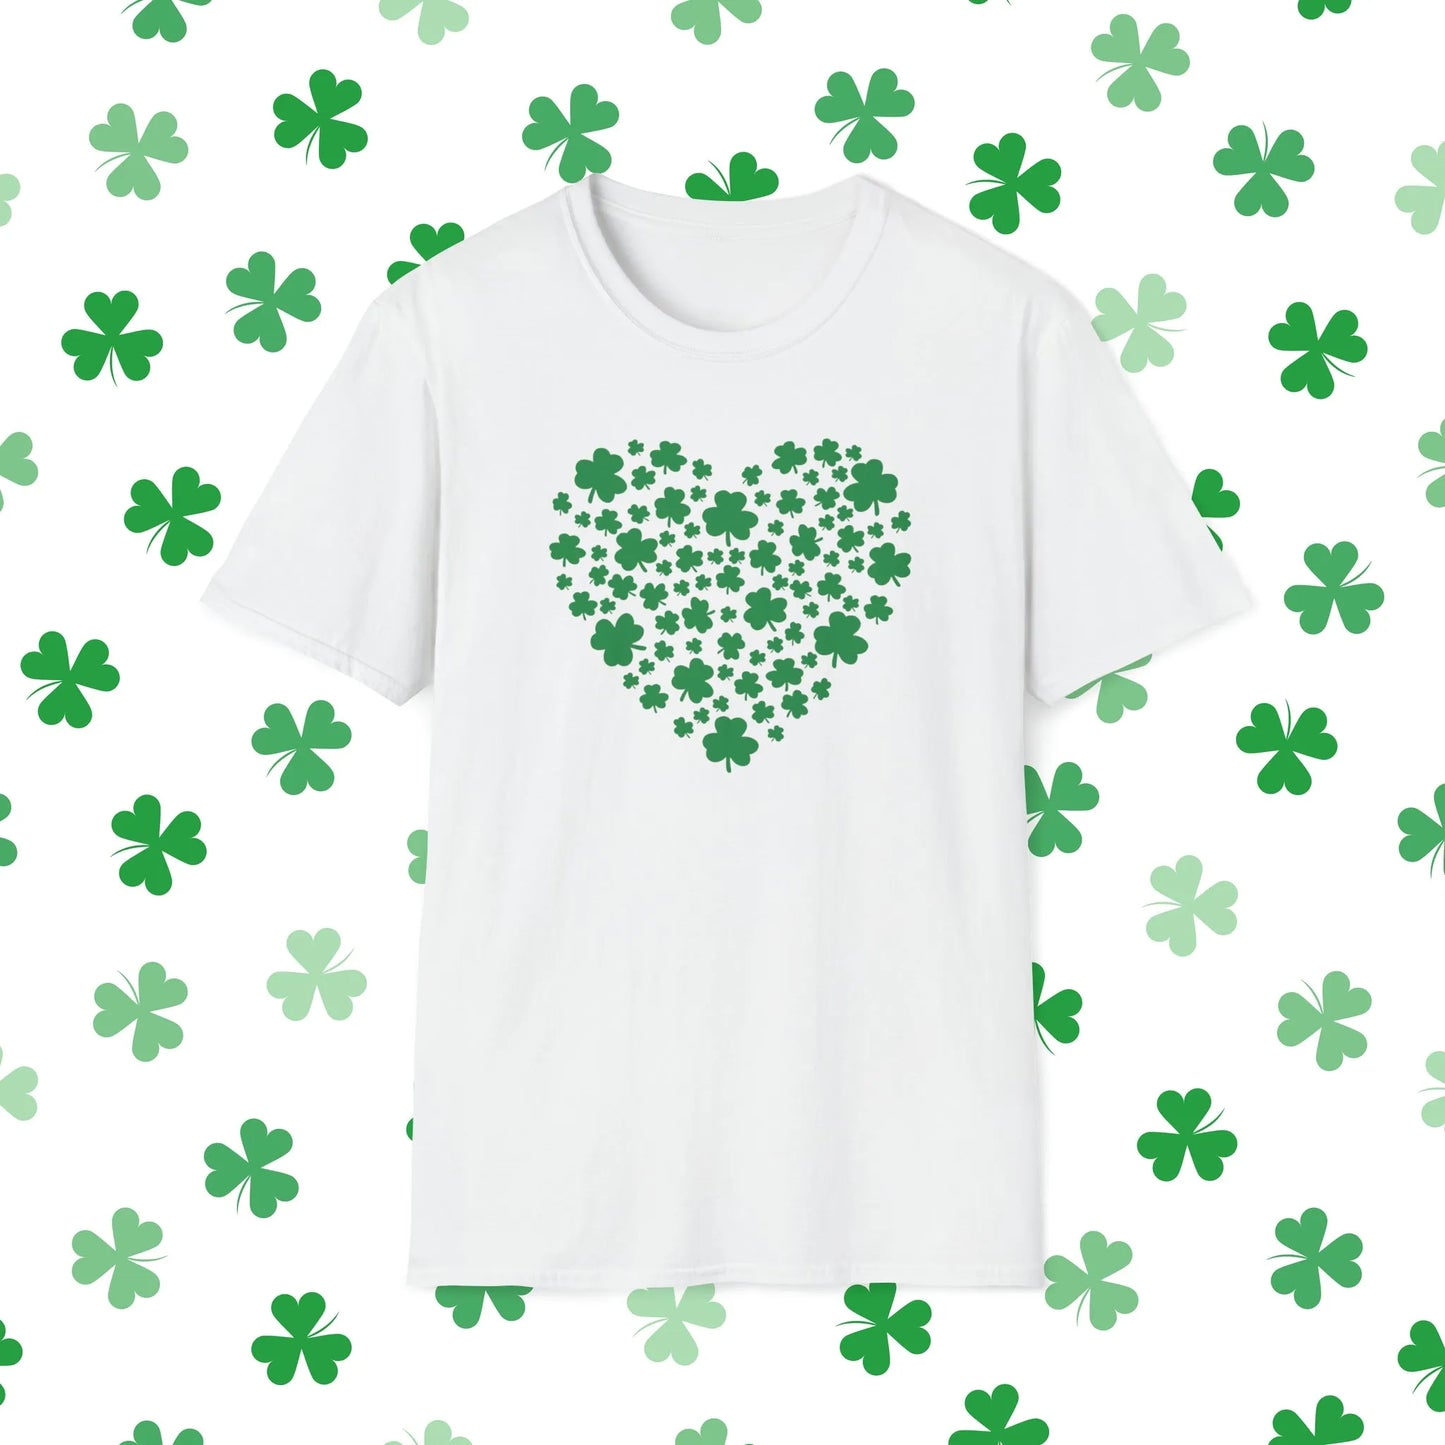 Heart of Shamrocks St. Patrick's Day T-Shirt - Comfort & Charm - Heart of Shamrocks Shirt White Front